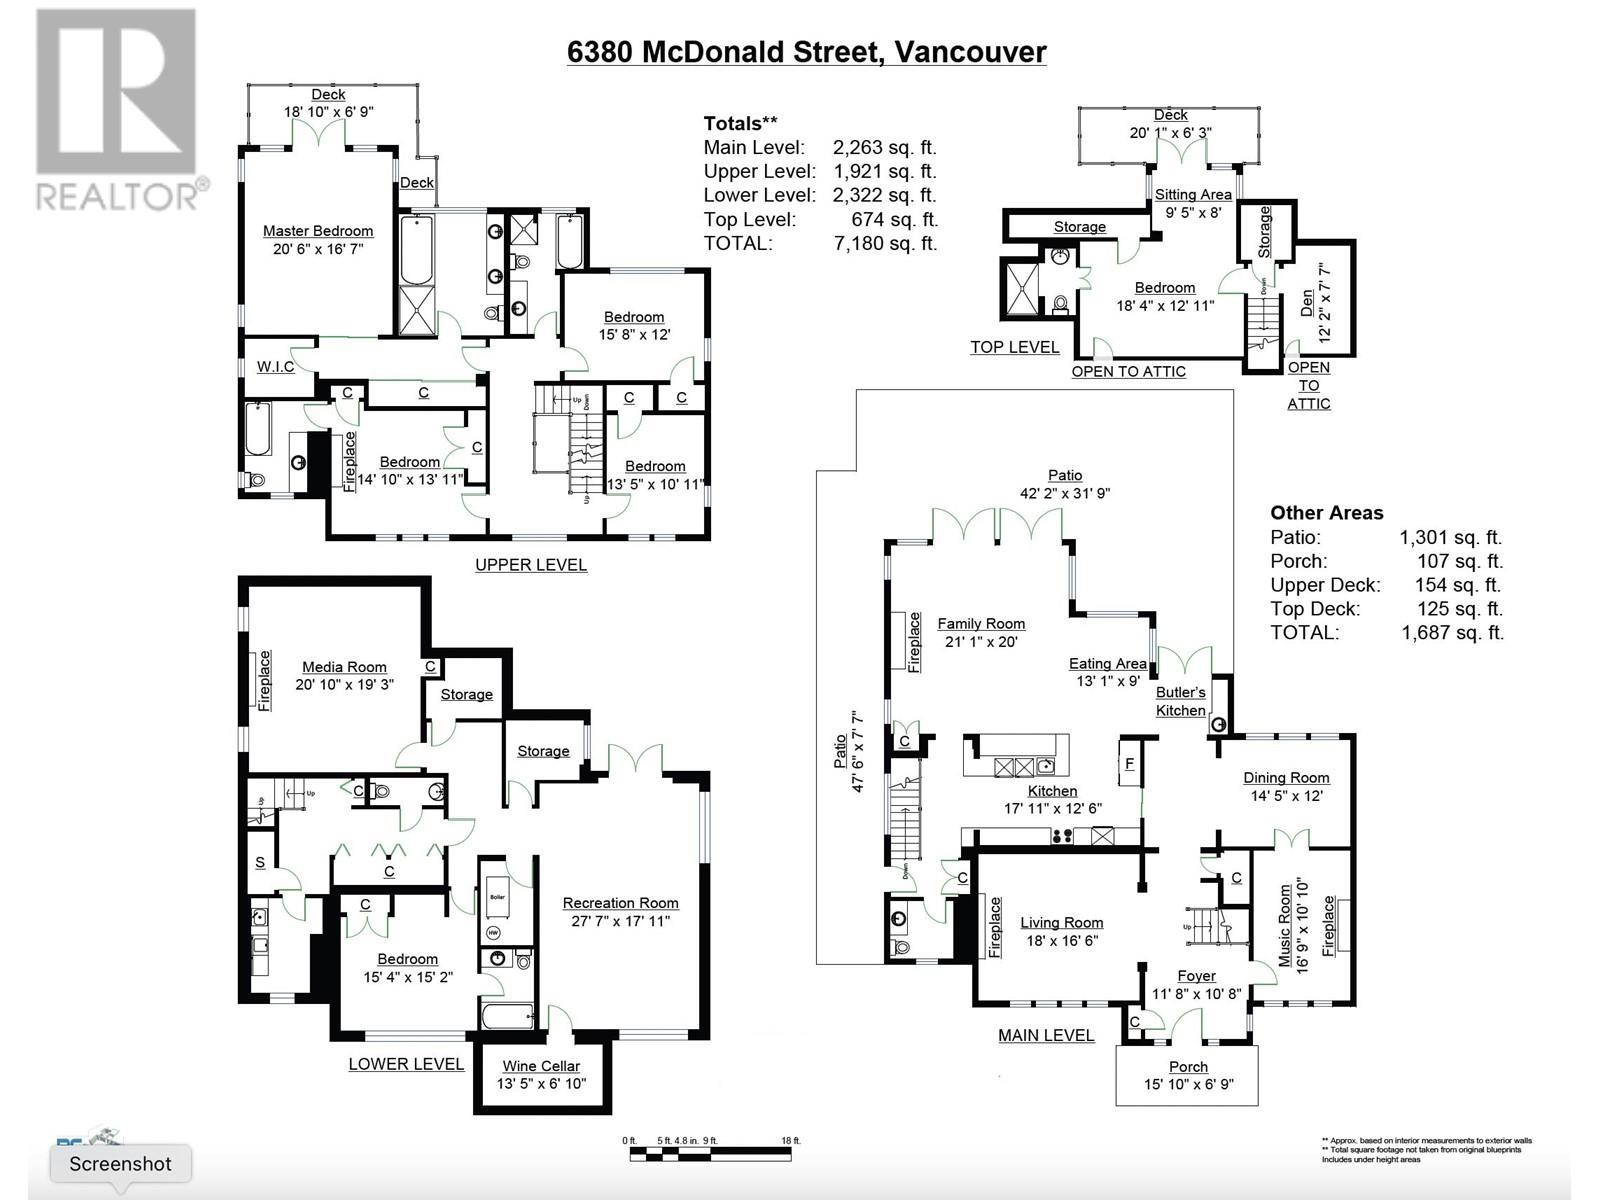 Listing Picture 33 of 33 : 6380 MACDONALD STREET, Vancouver / 溫哥華 - 魯藝地產 Yvonne Lu Group - MLS Medallion Club Member